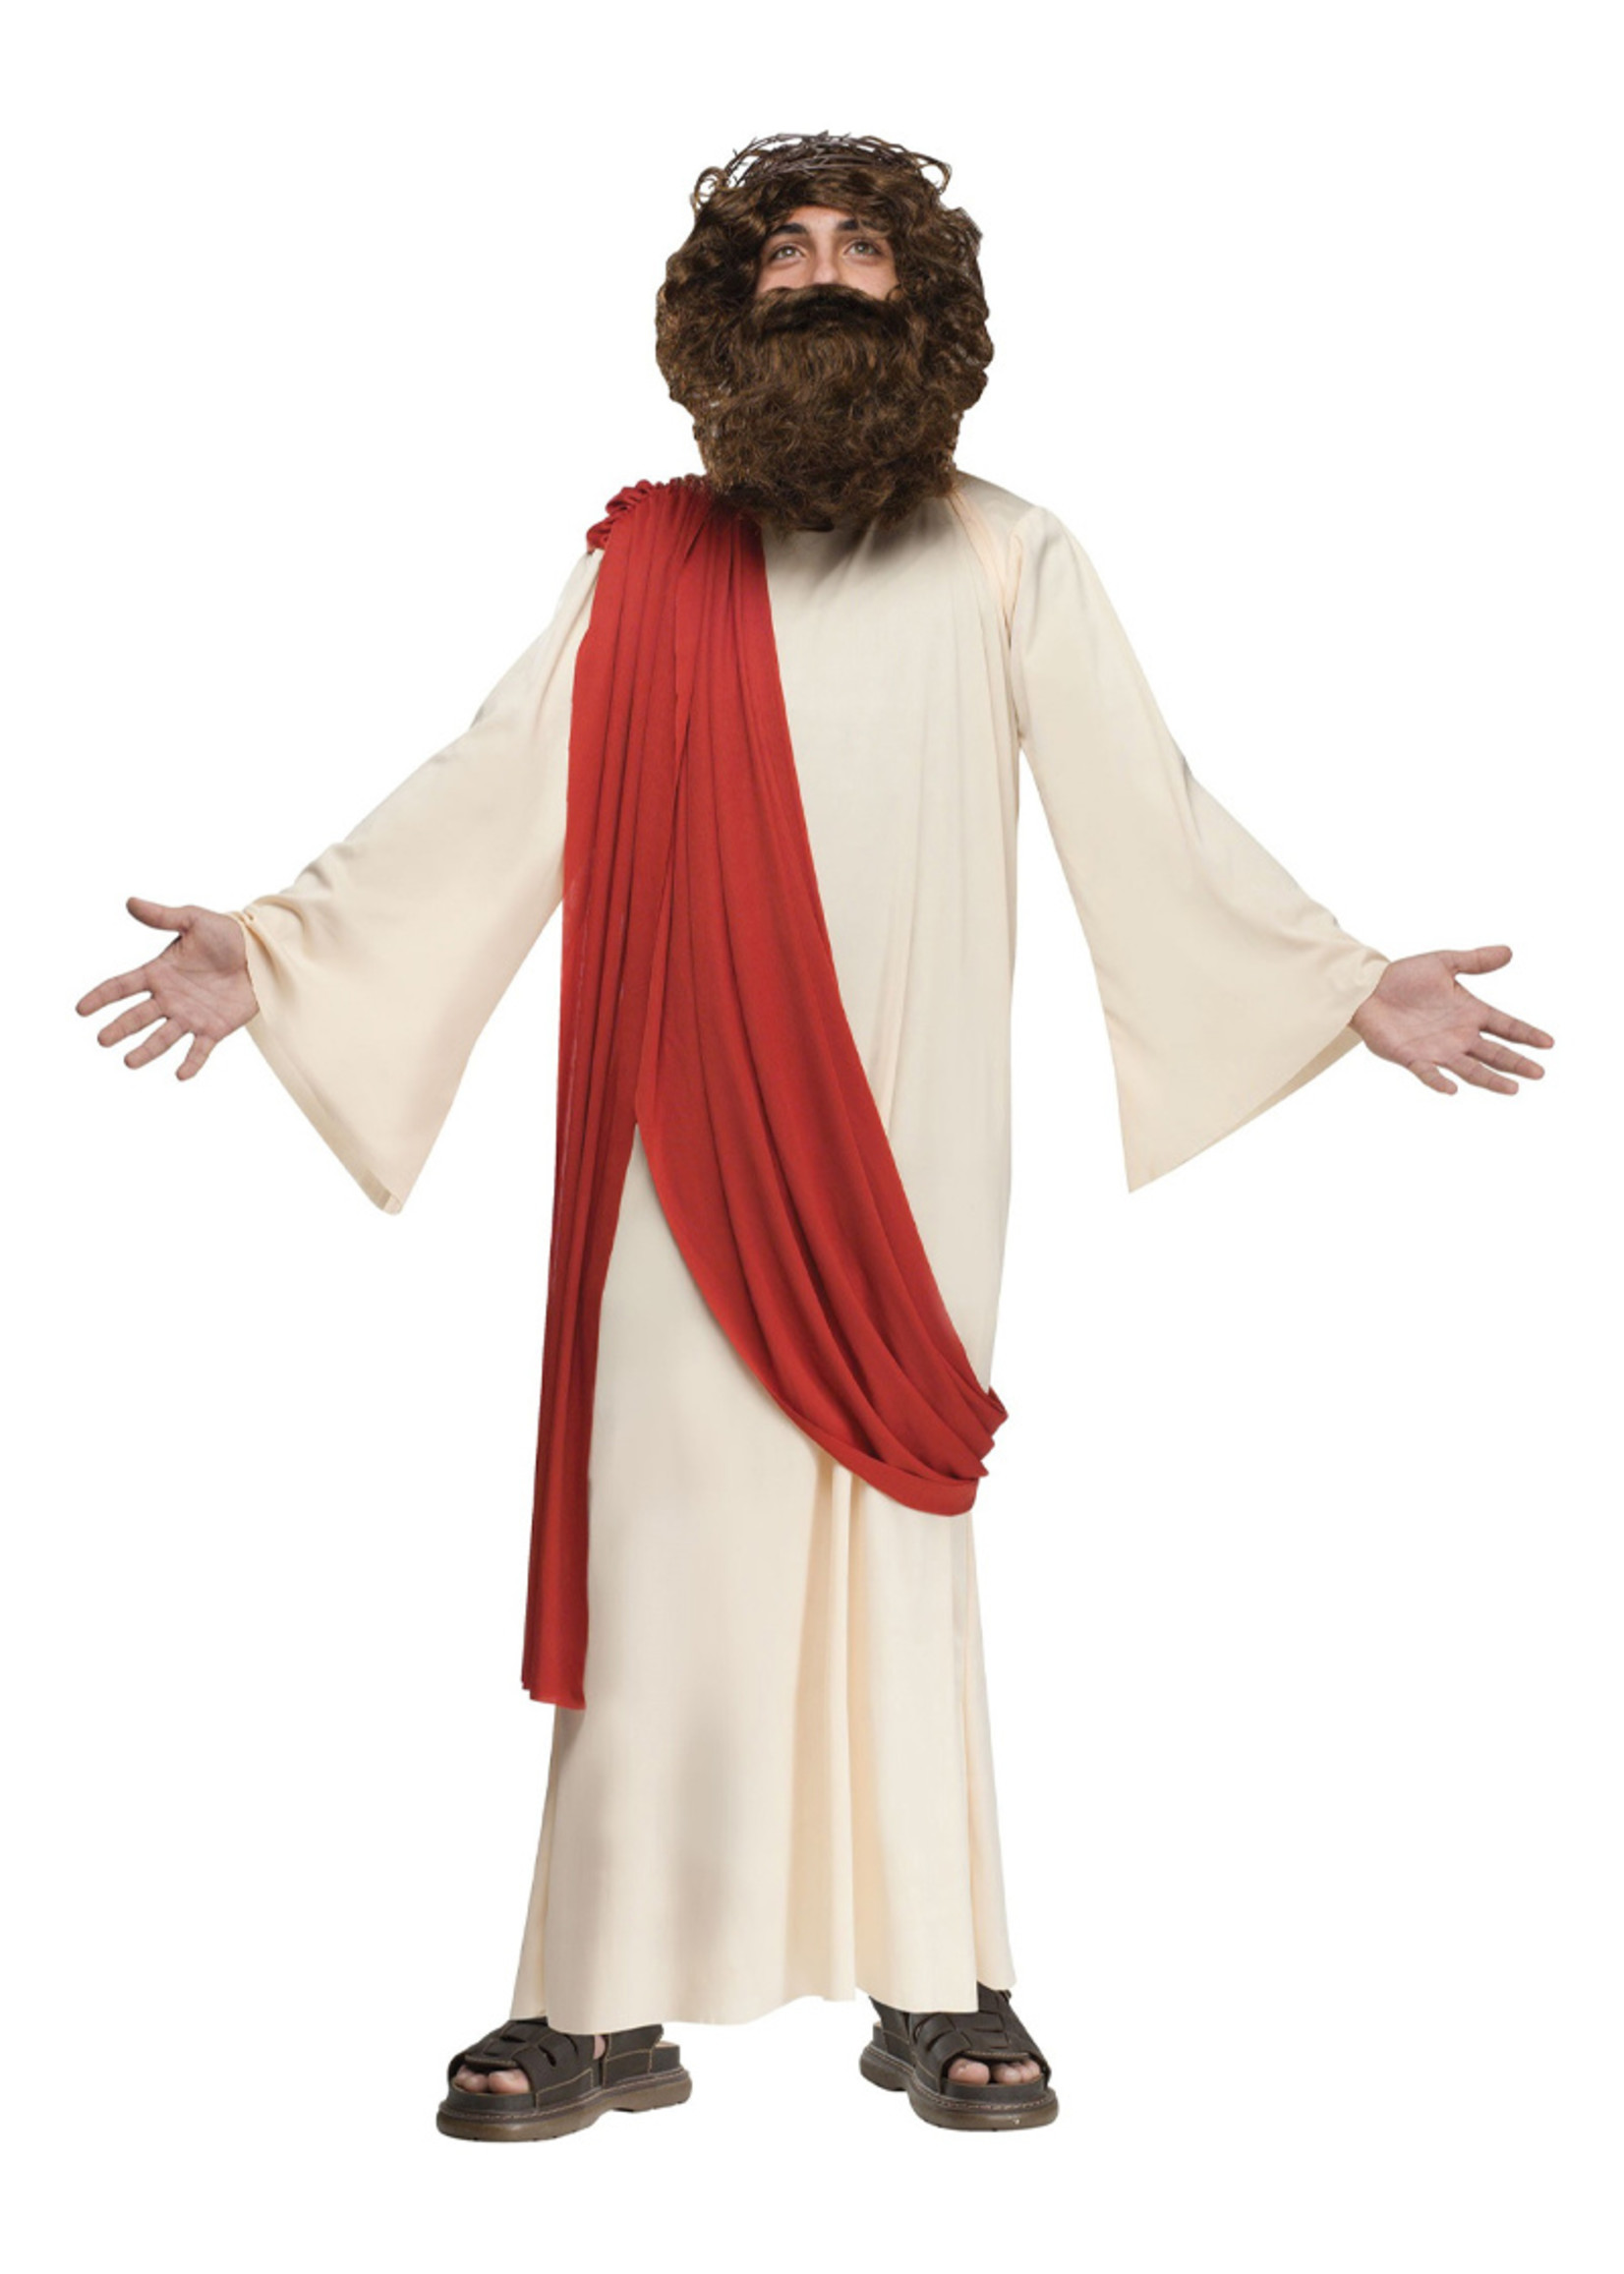 FUN WORLD Jesus Costume - Boys